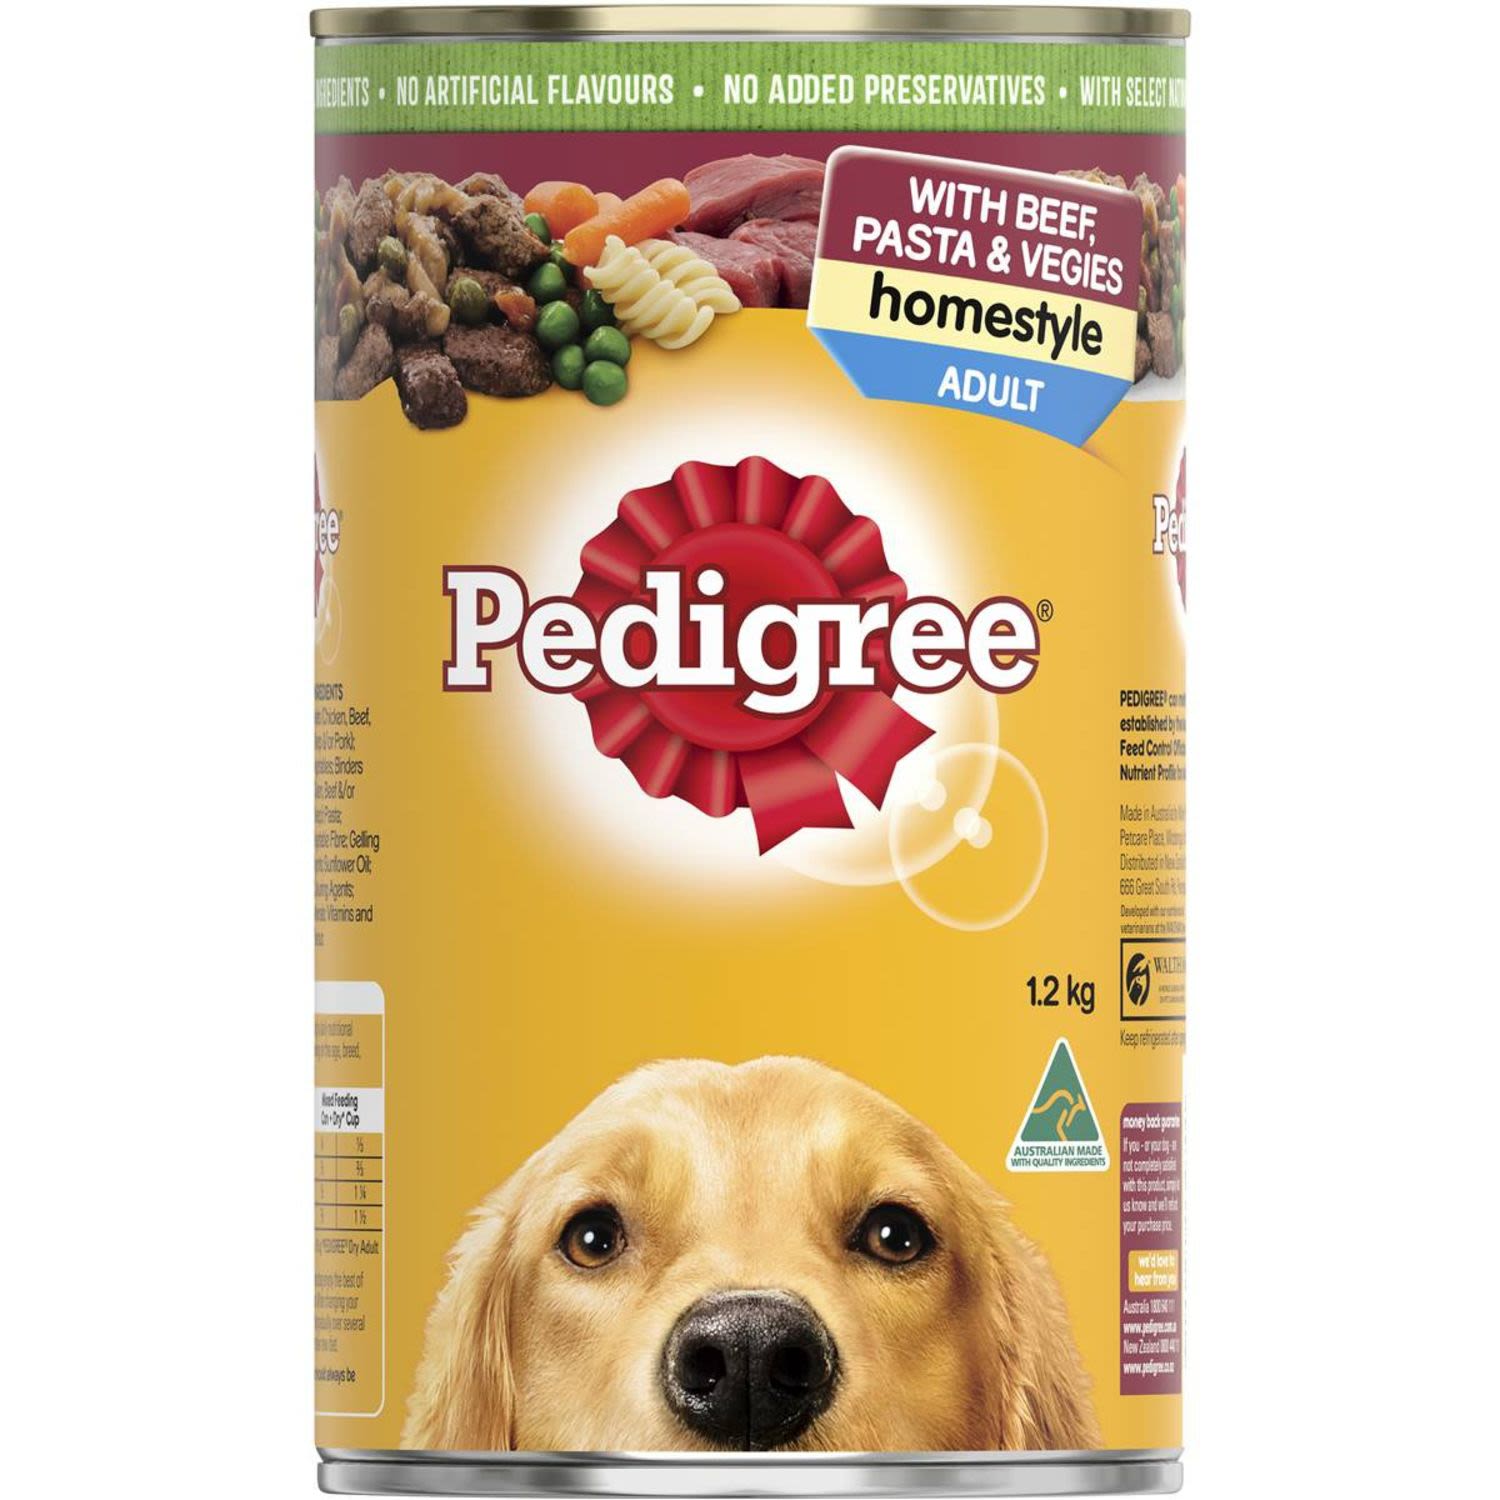 Pedigree Homestyle With Beef Pasta & Veggies Wet Dog Food Can, 1.2 Kilogram